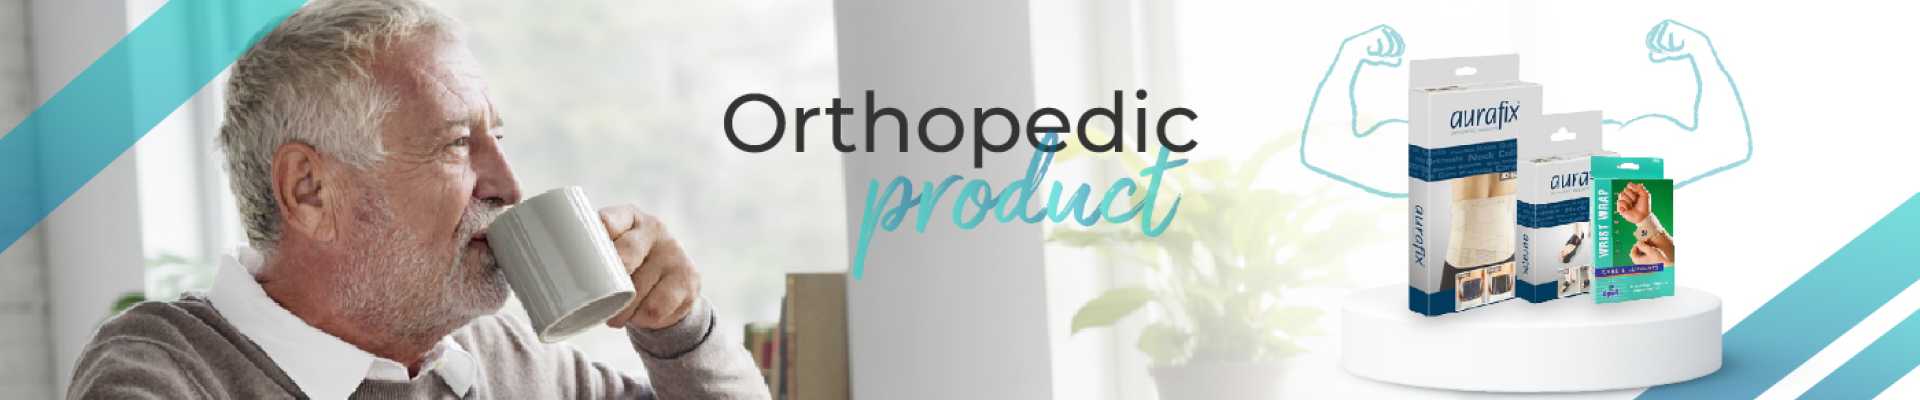 orthopedic product